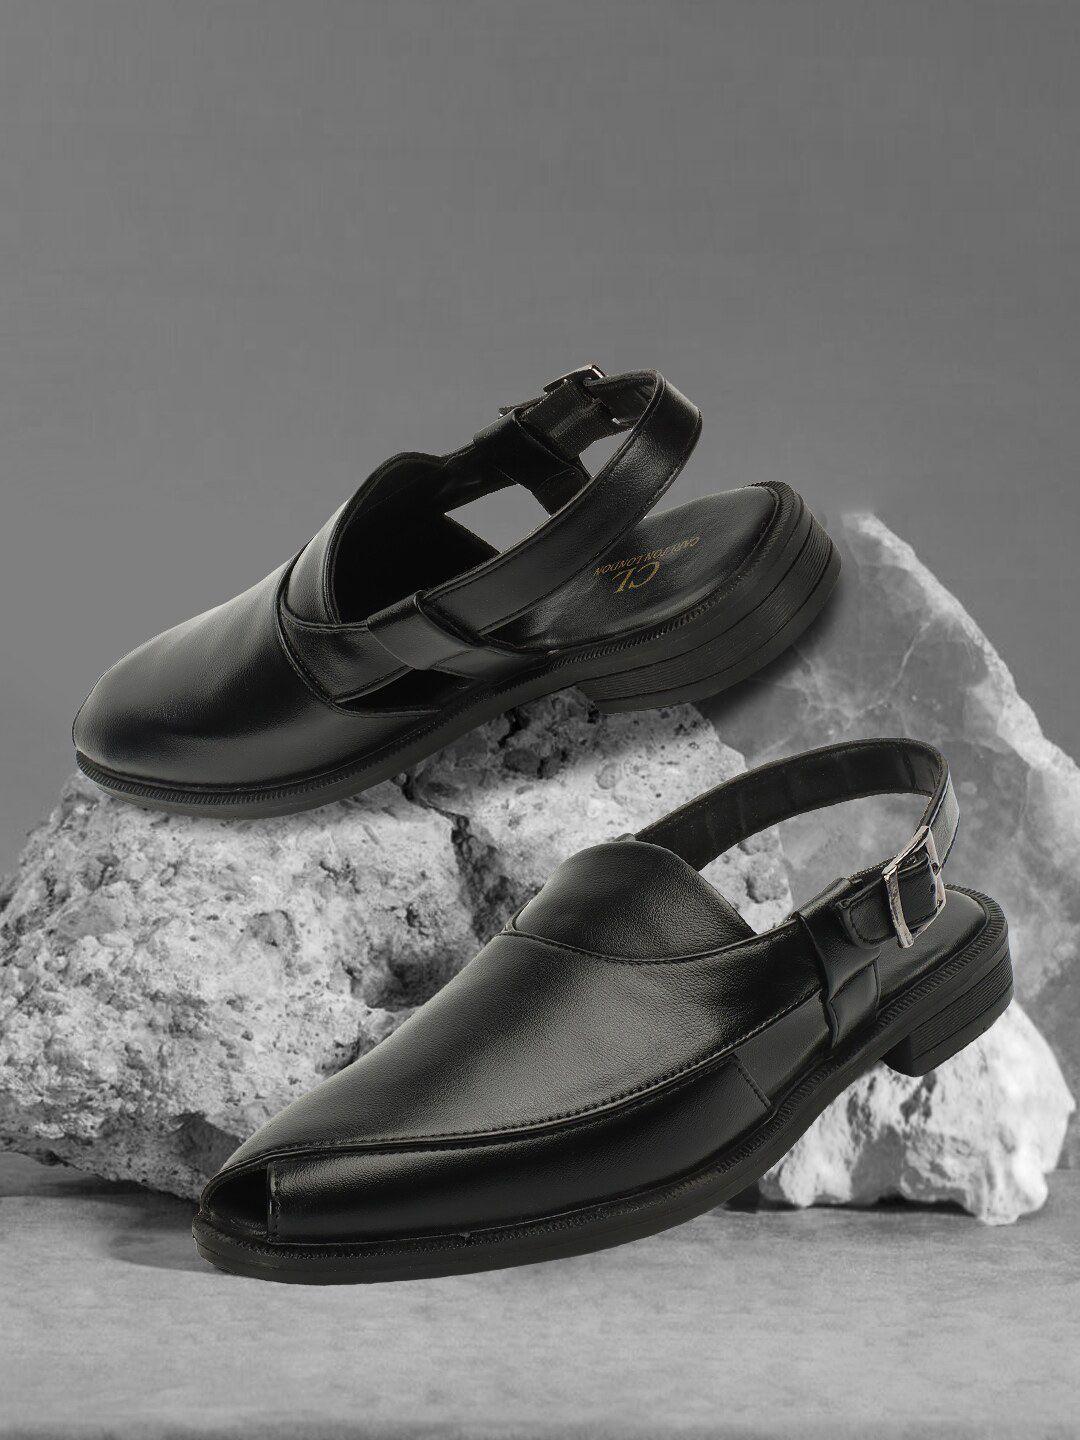 carlton-london-men-textured-comfort-sandals